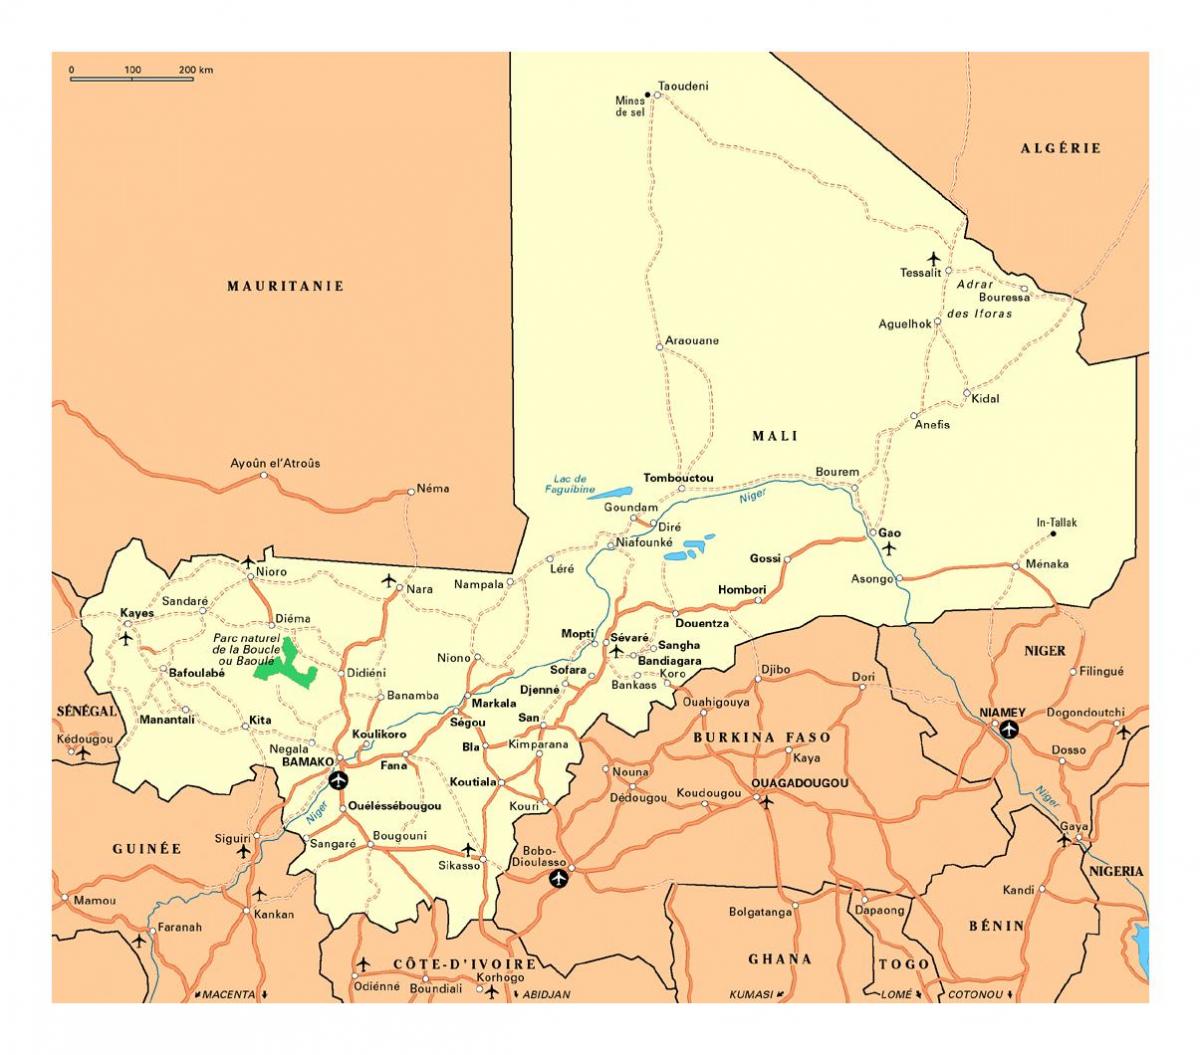 Peta bandar-bandar Mali